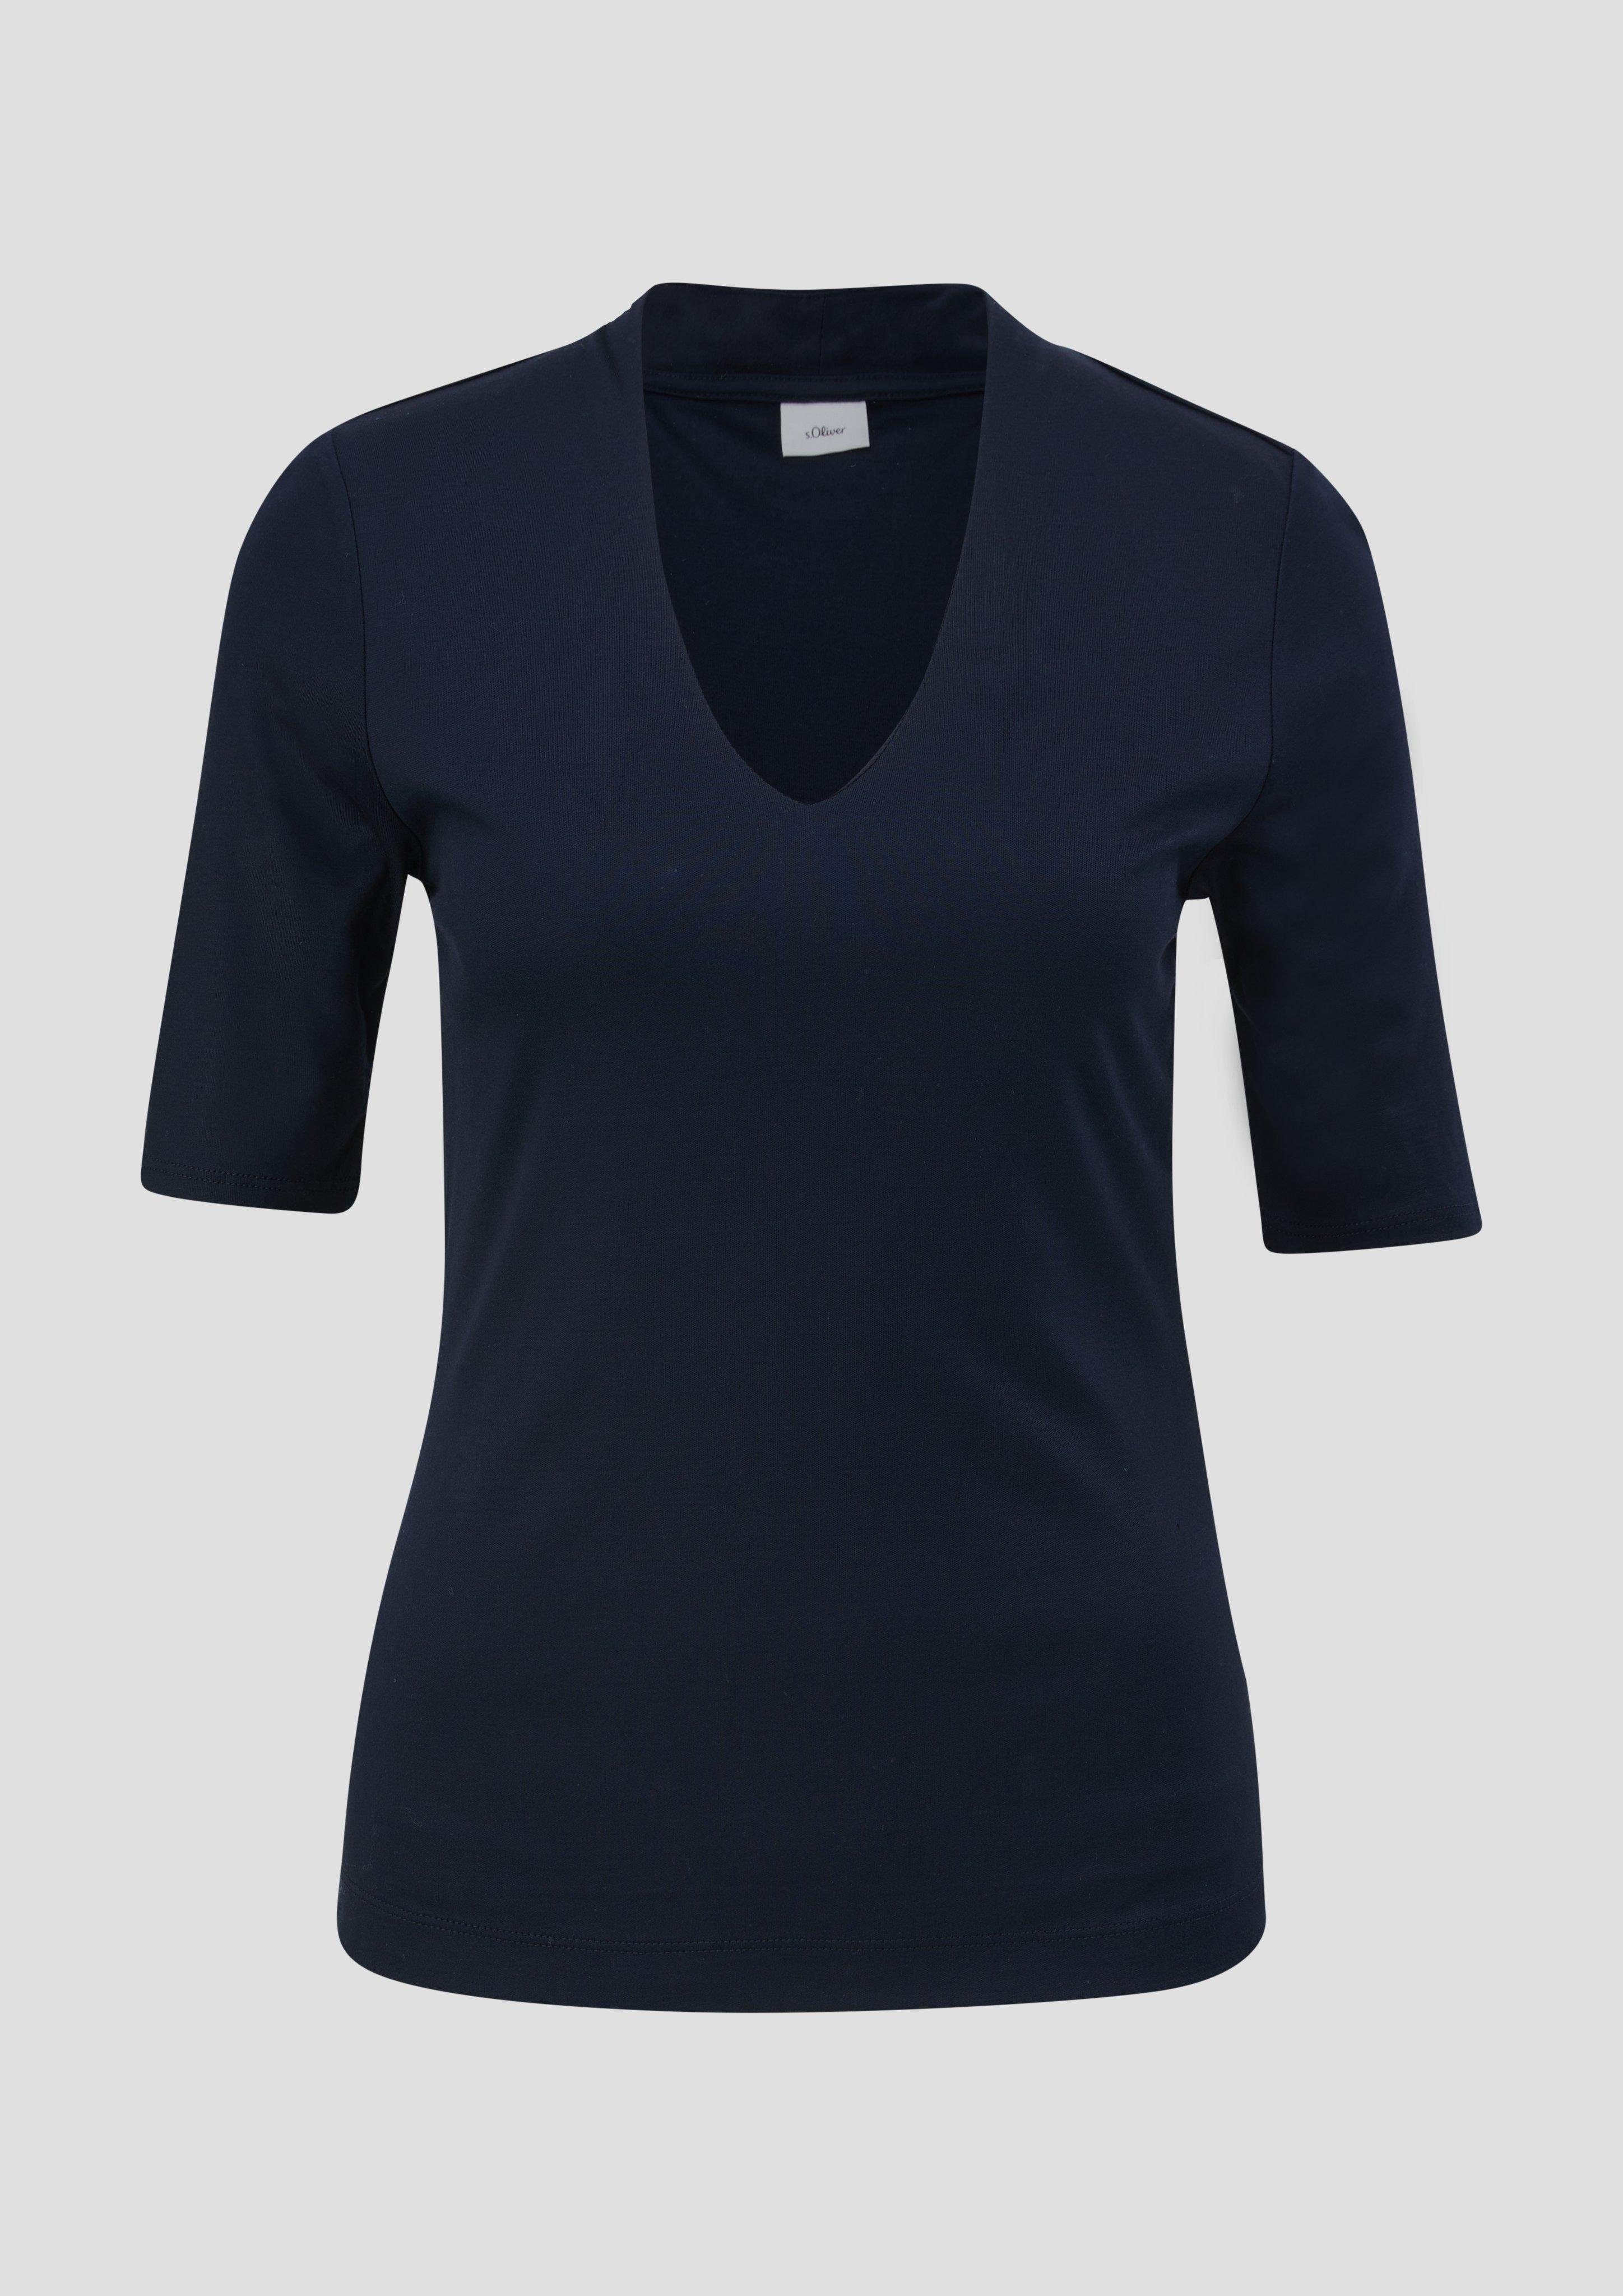 s.Oliver BLACK LABEL Kurzarmshirt T-Shirt dunkles marineblau Raffung V-Ausschnitt mit